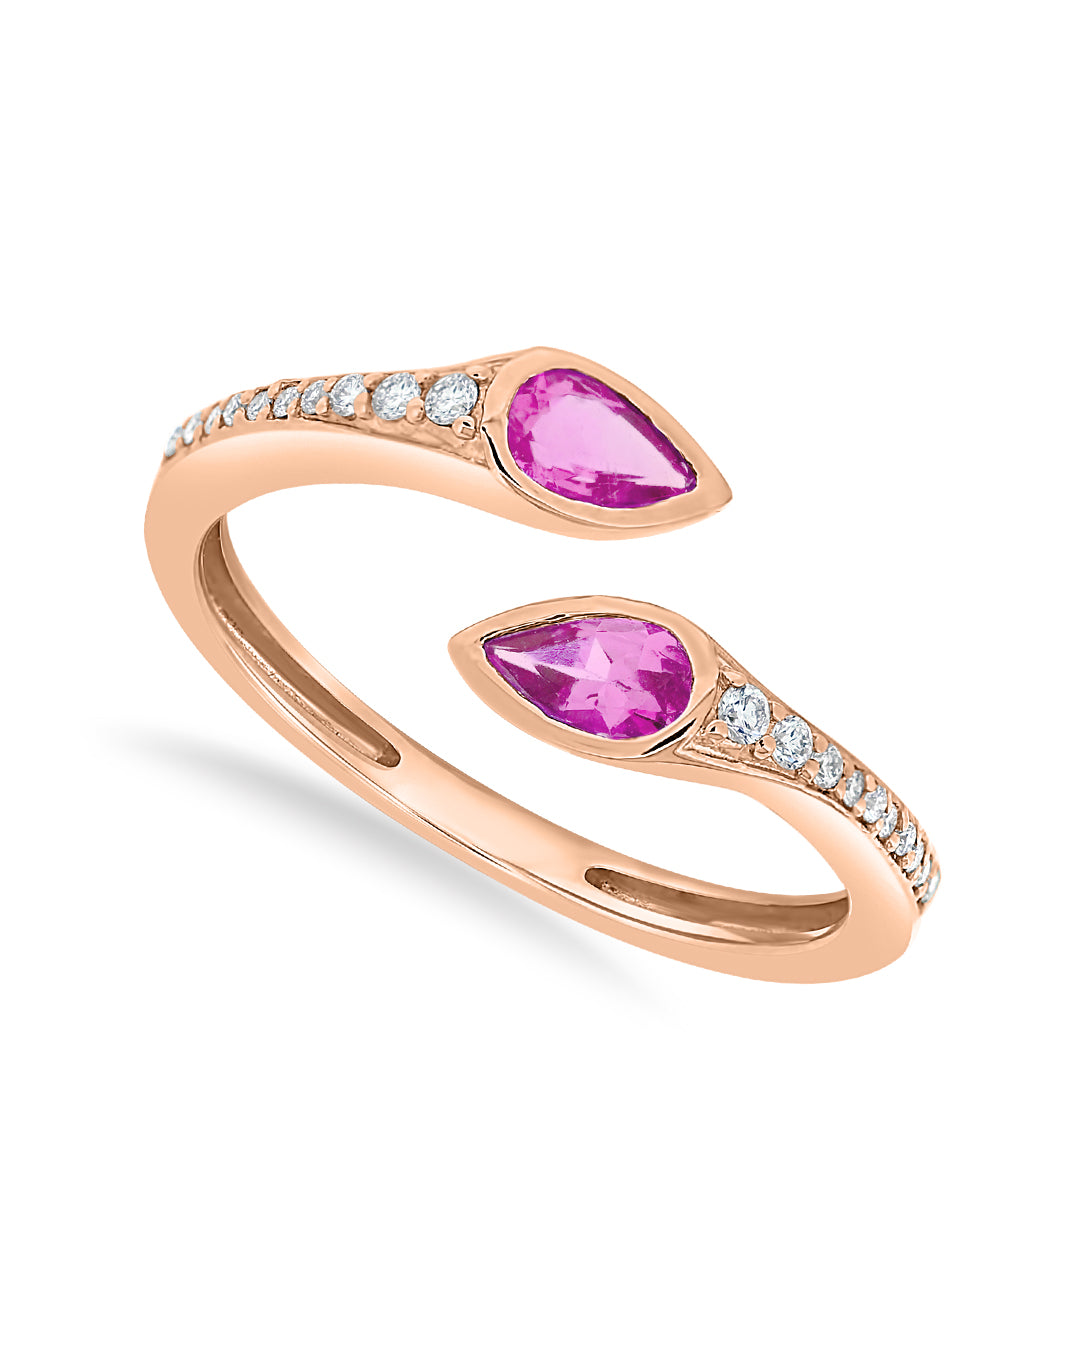 Iva Sapphire Ring